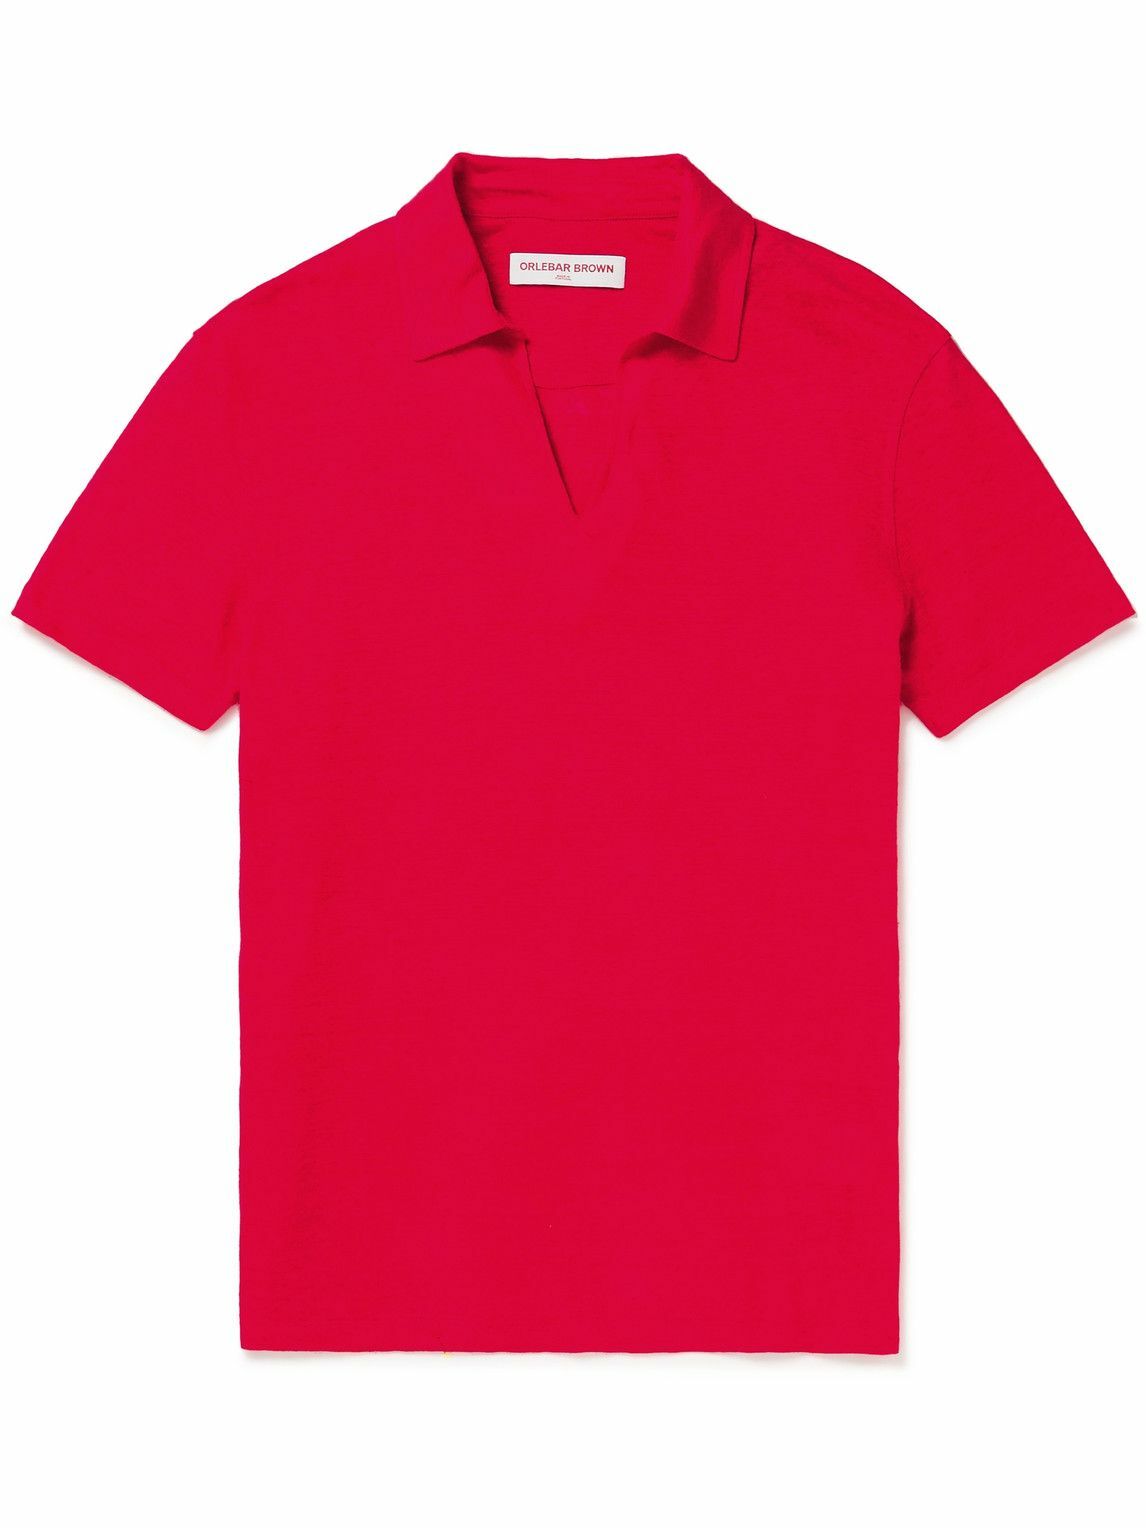 Orlebar Brown - Mayer Linen Polo Shirt - Red Orlebar Brown